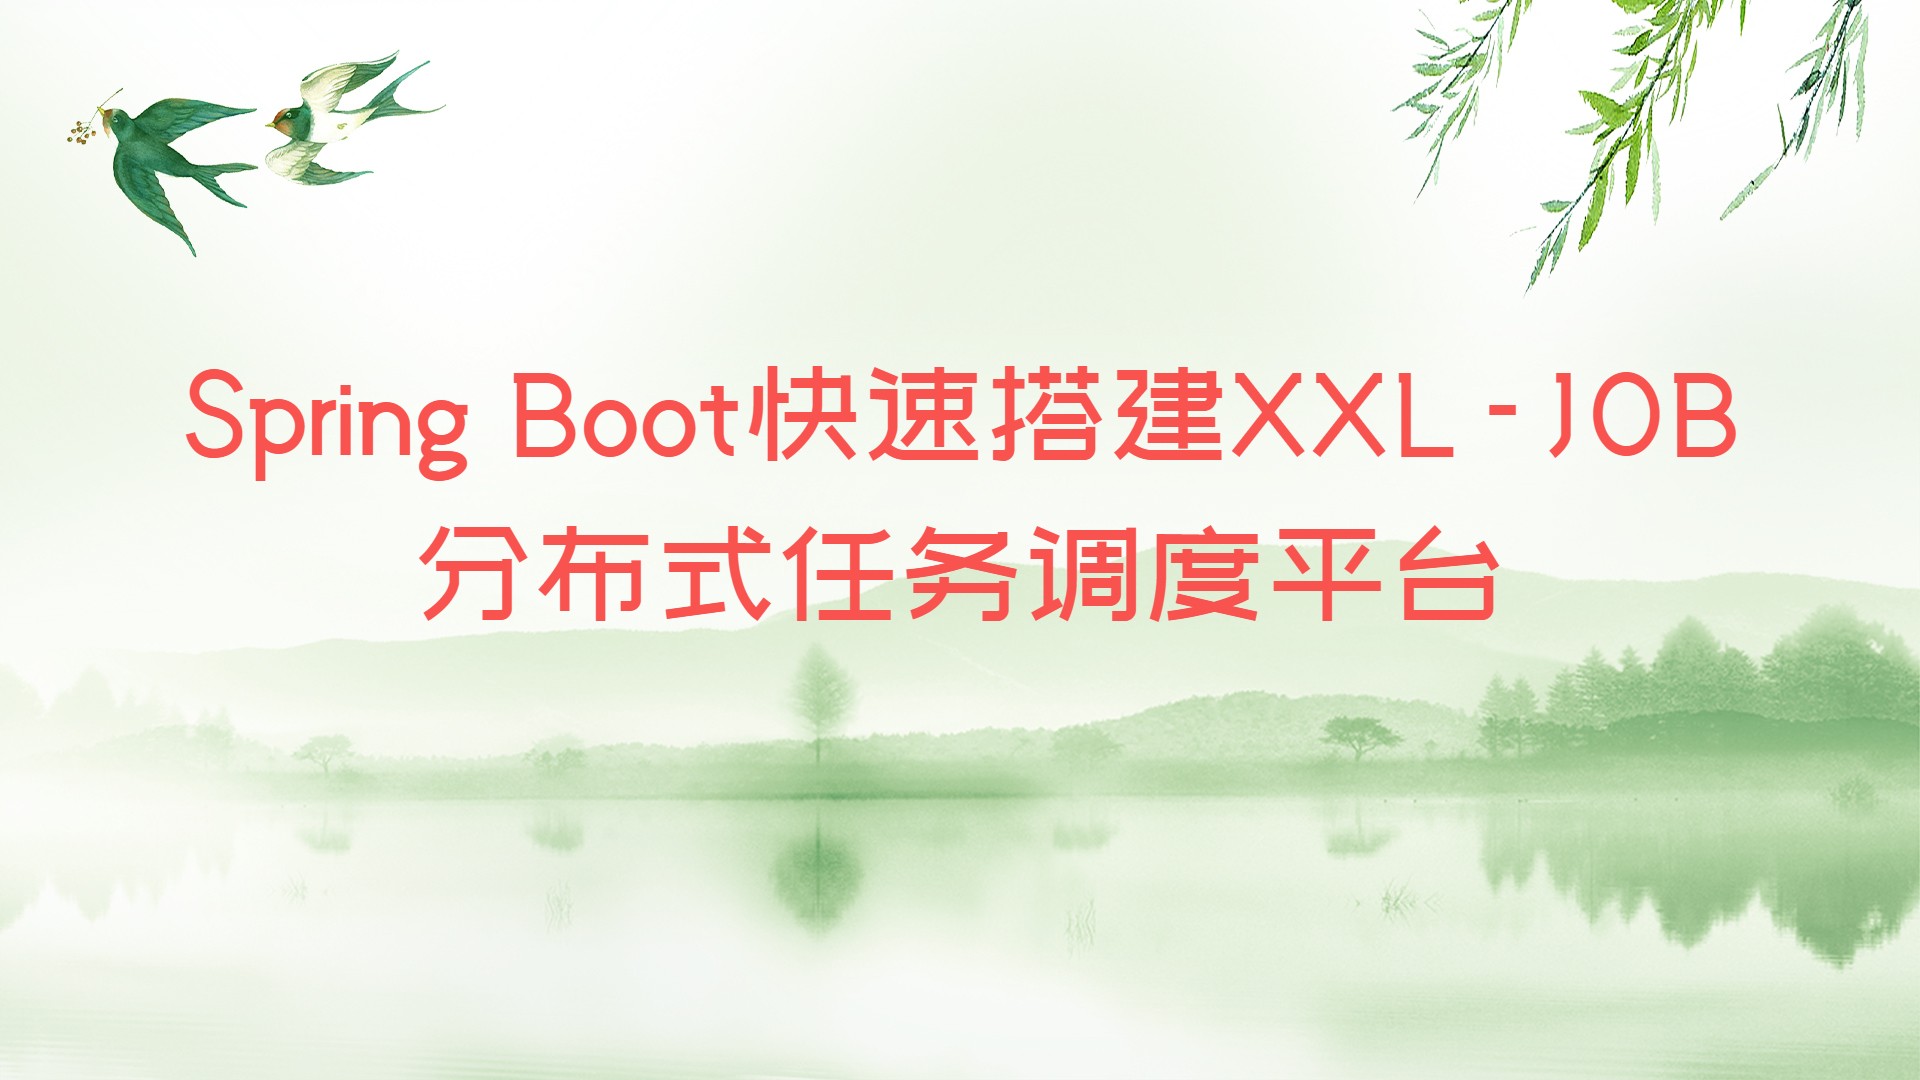 Spring Boot快速搭建XXL-JOB分布式任务调度平台